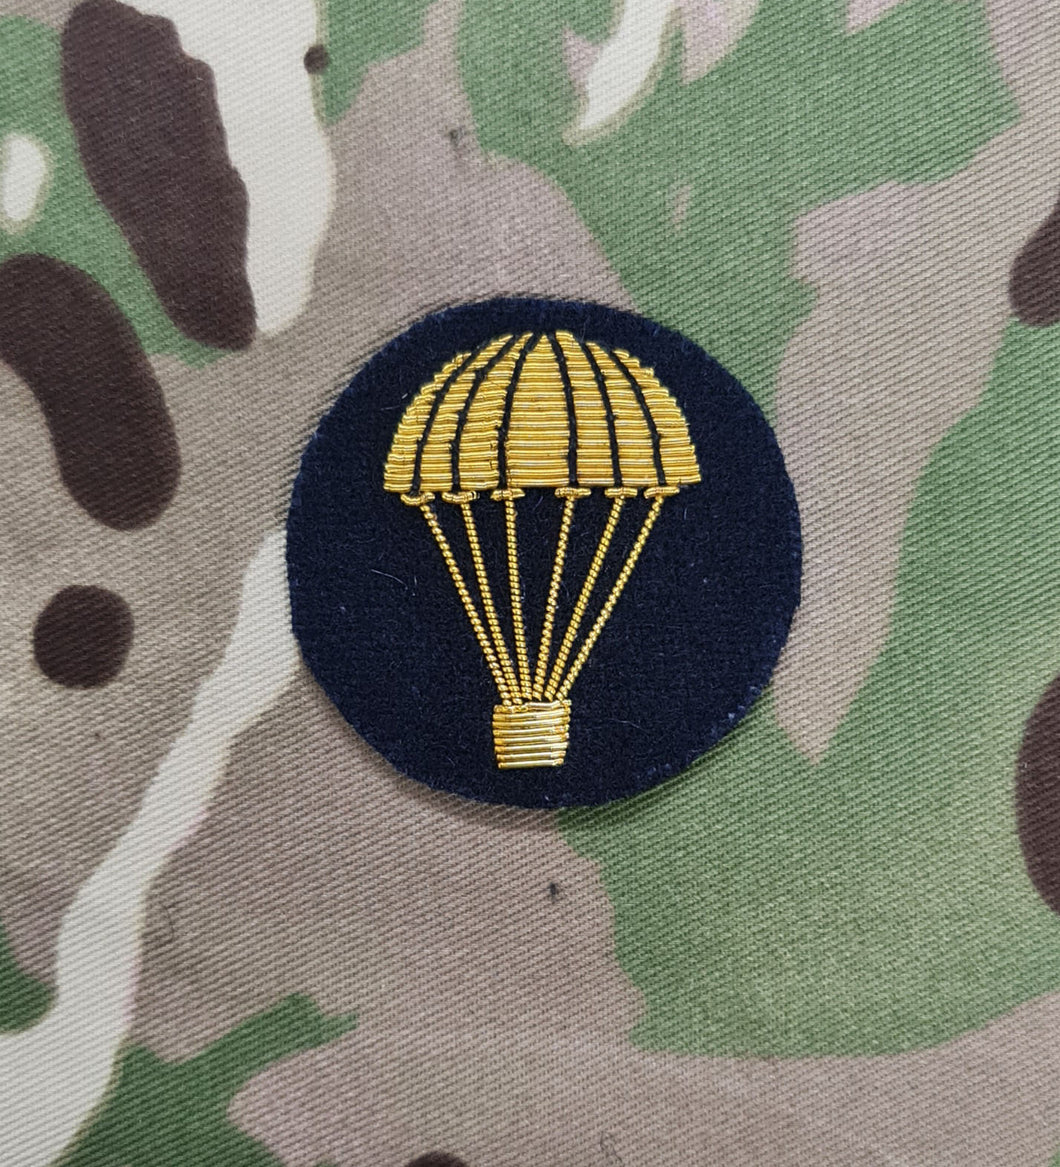 British Parachutist qualification Jump balloon 'light bulb' bullion gold on black No1 dress